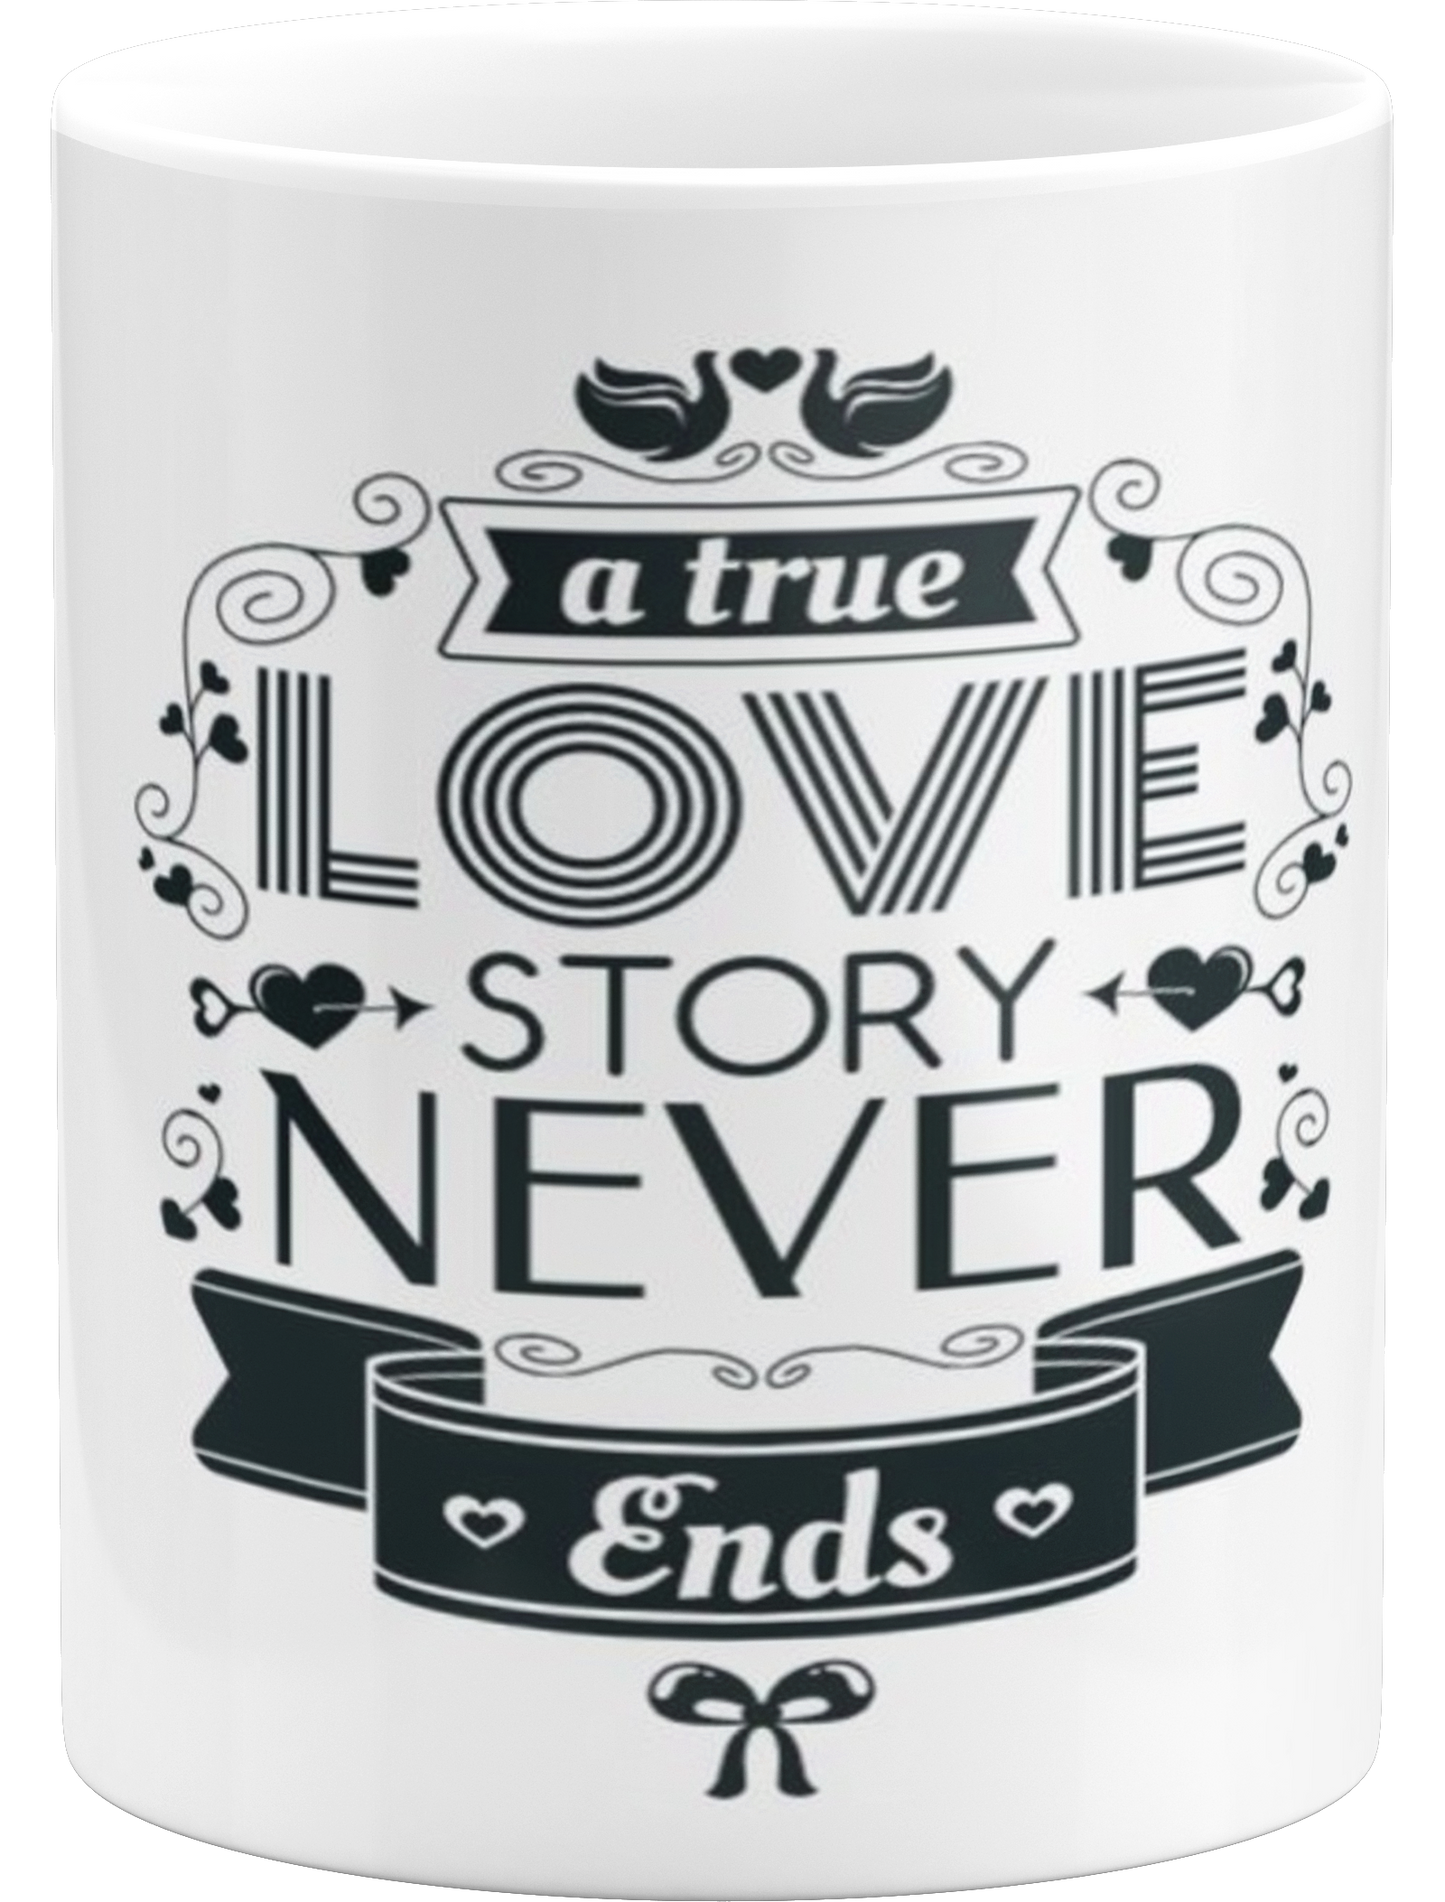 A true love storie never ends face